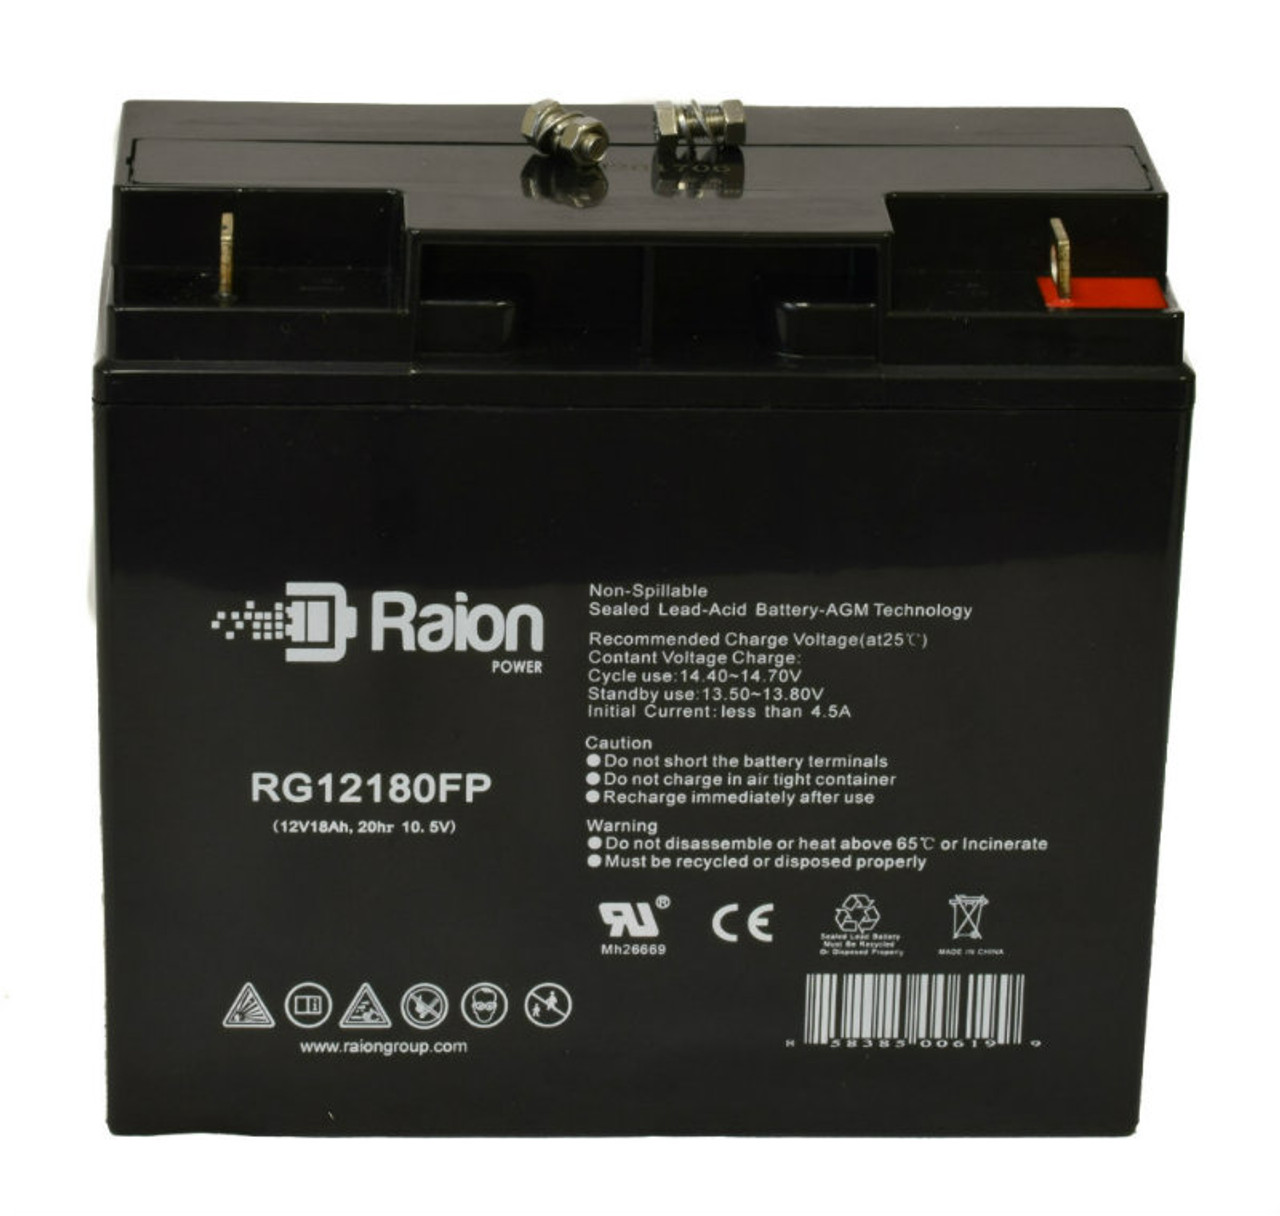 Raion Power RG12180FP 12V 18Ah Lead Acid Battery for Ferno-ille 129 Lift Chair